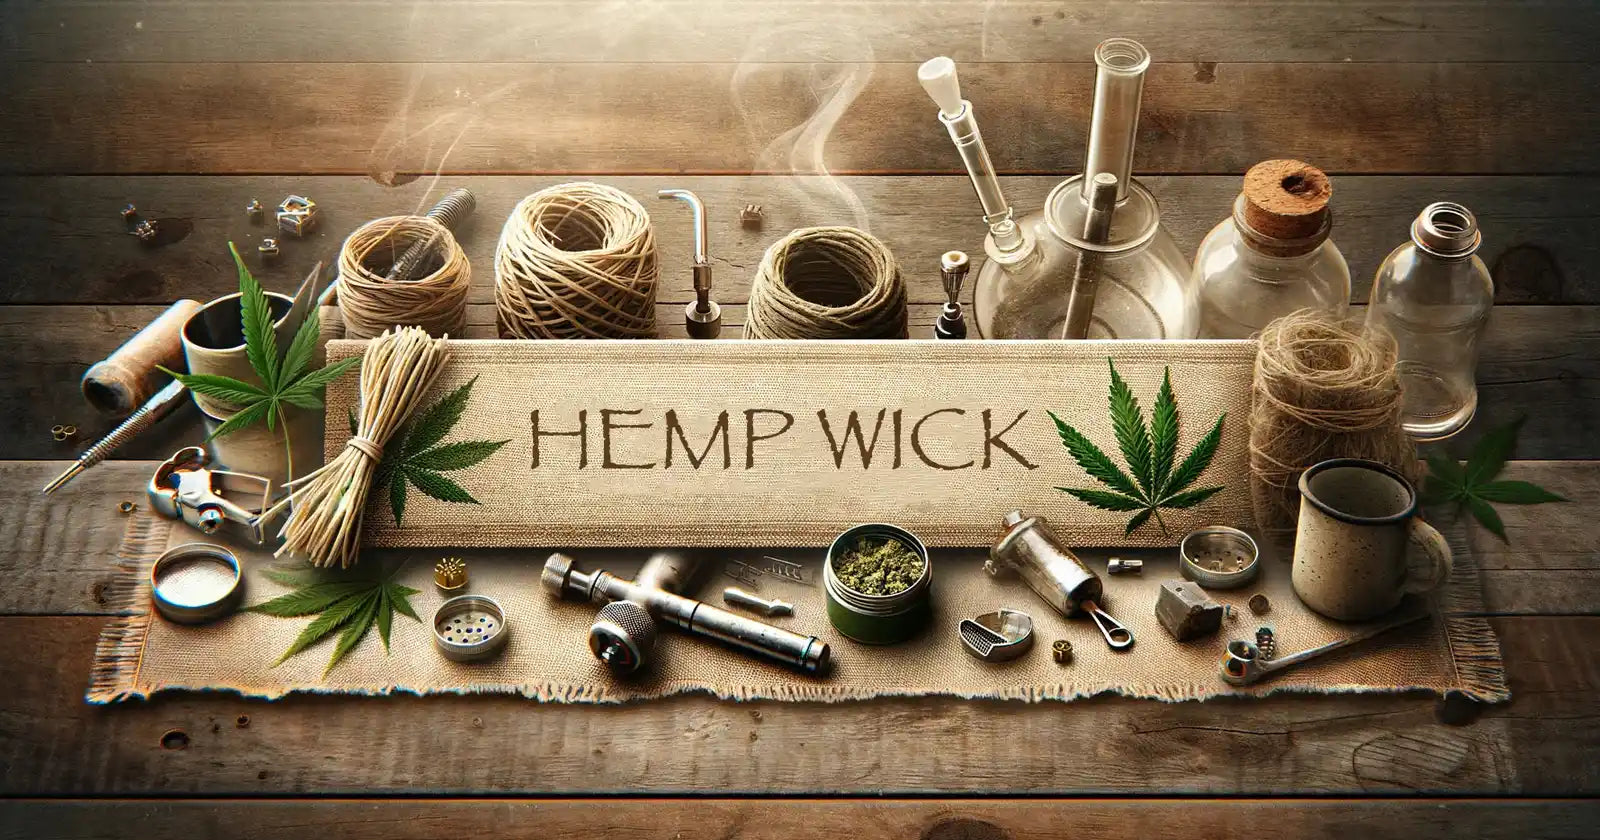 Hemp wick vs lighter for cannabis